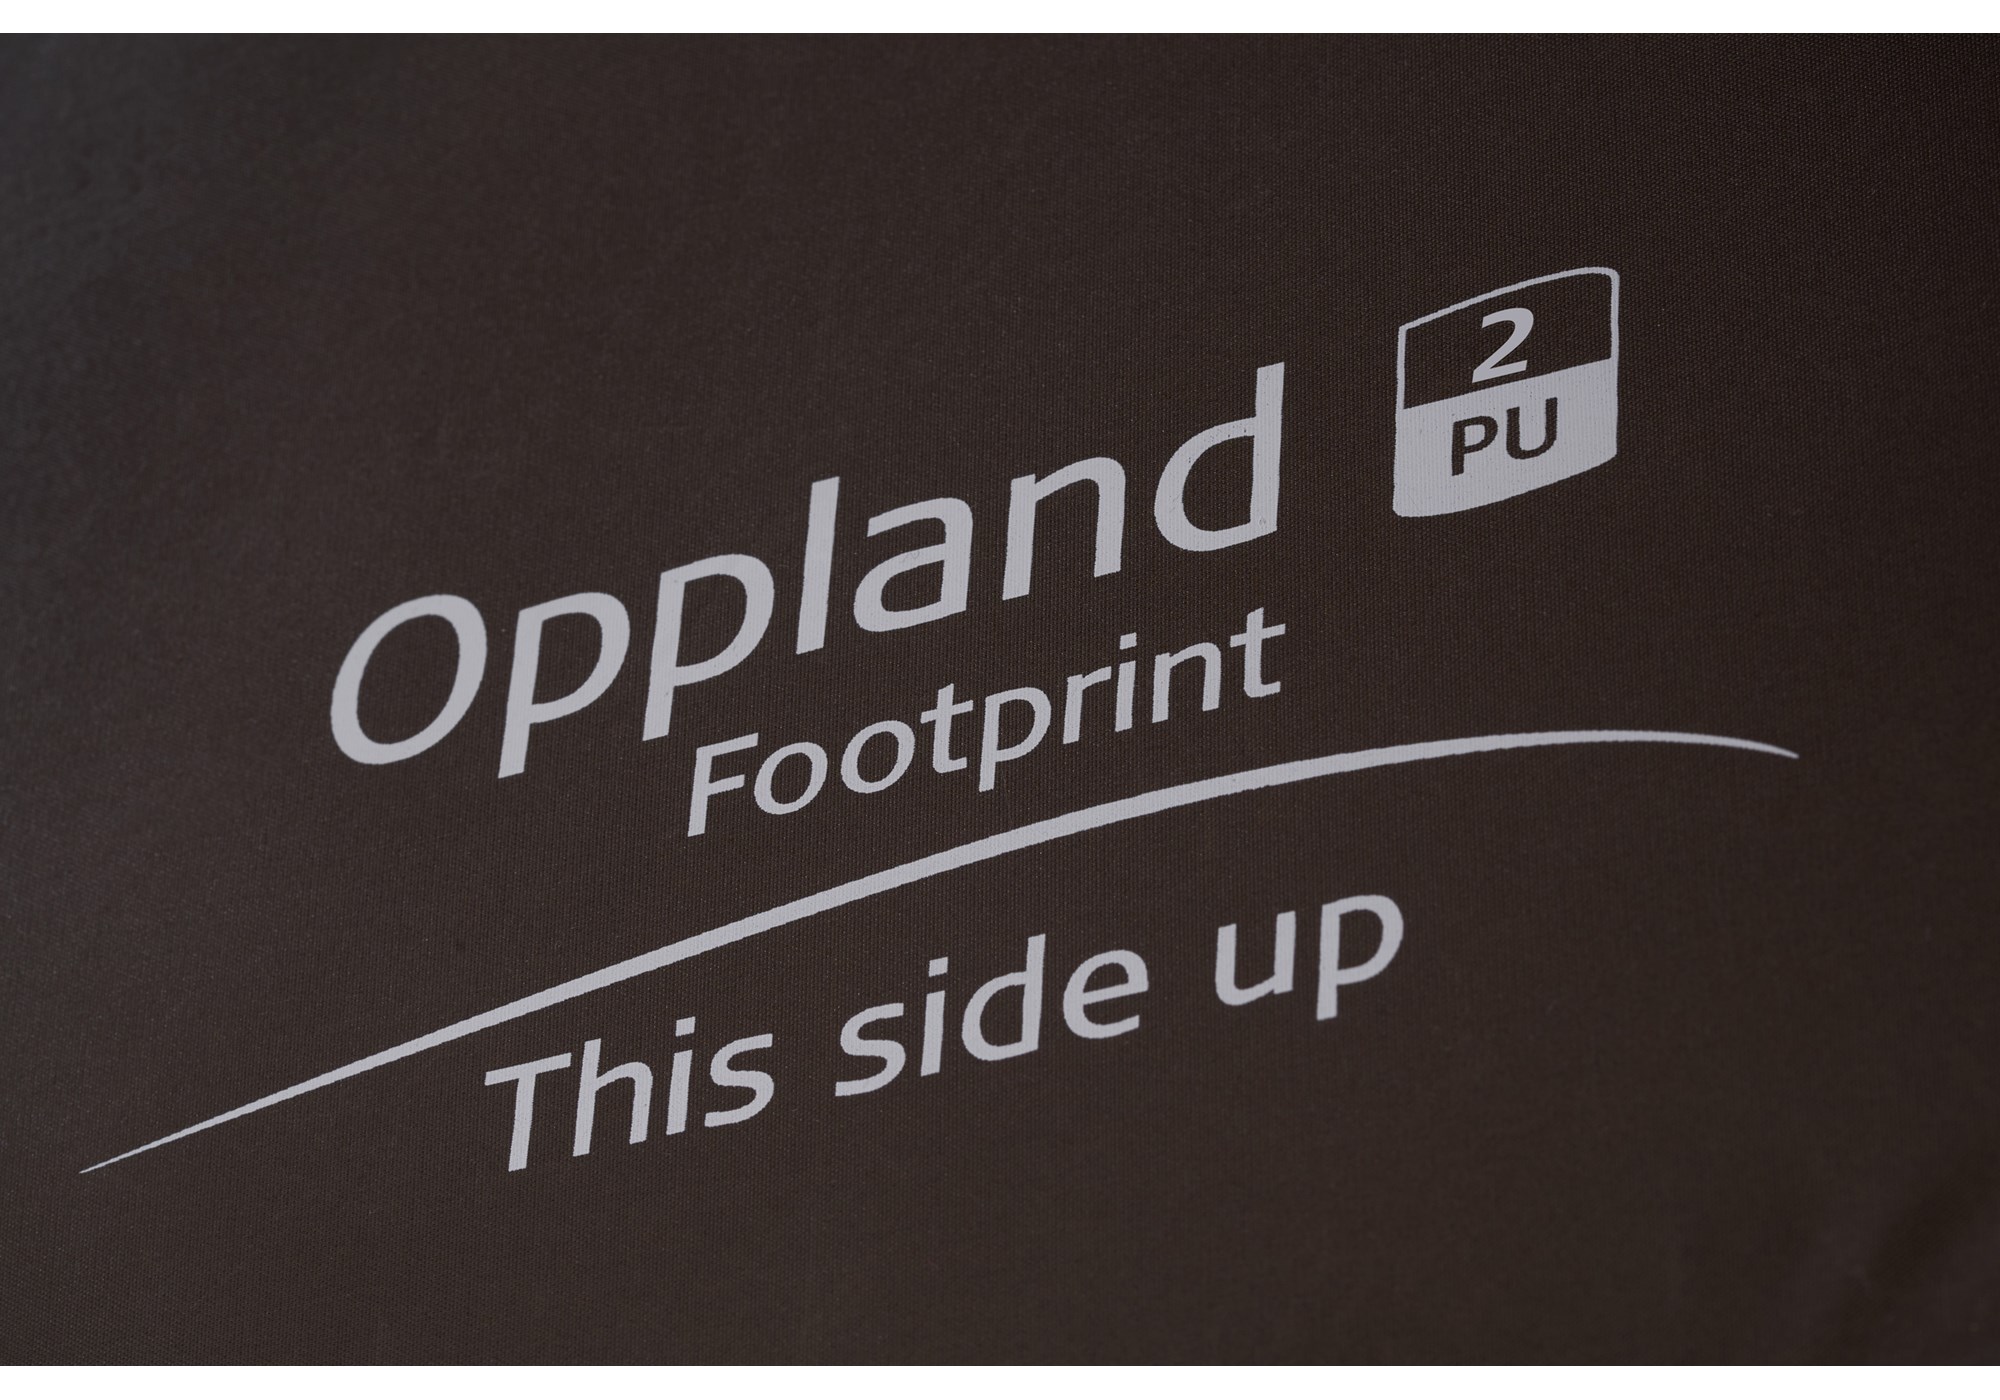 Oppland 2 (2.0) Footprint